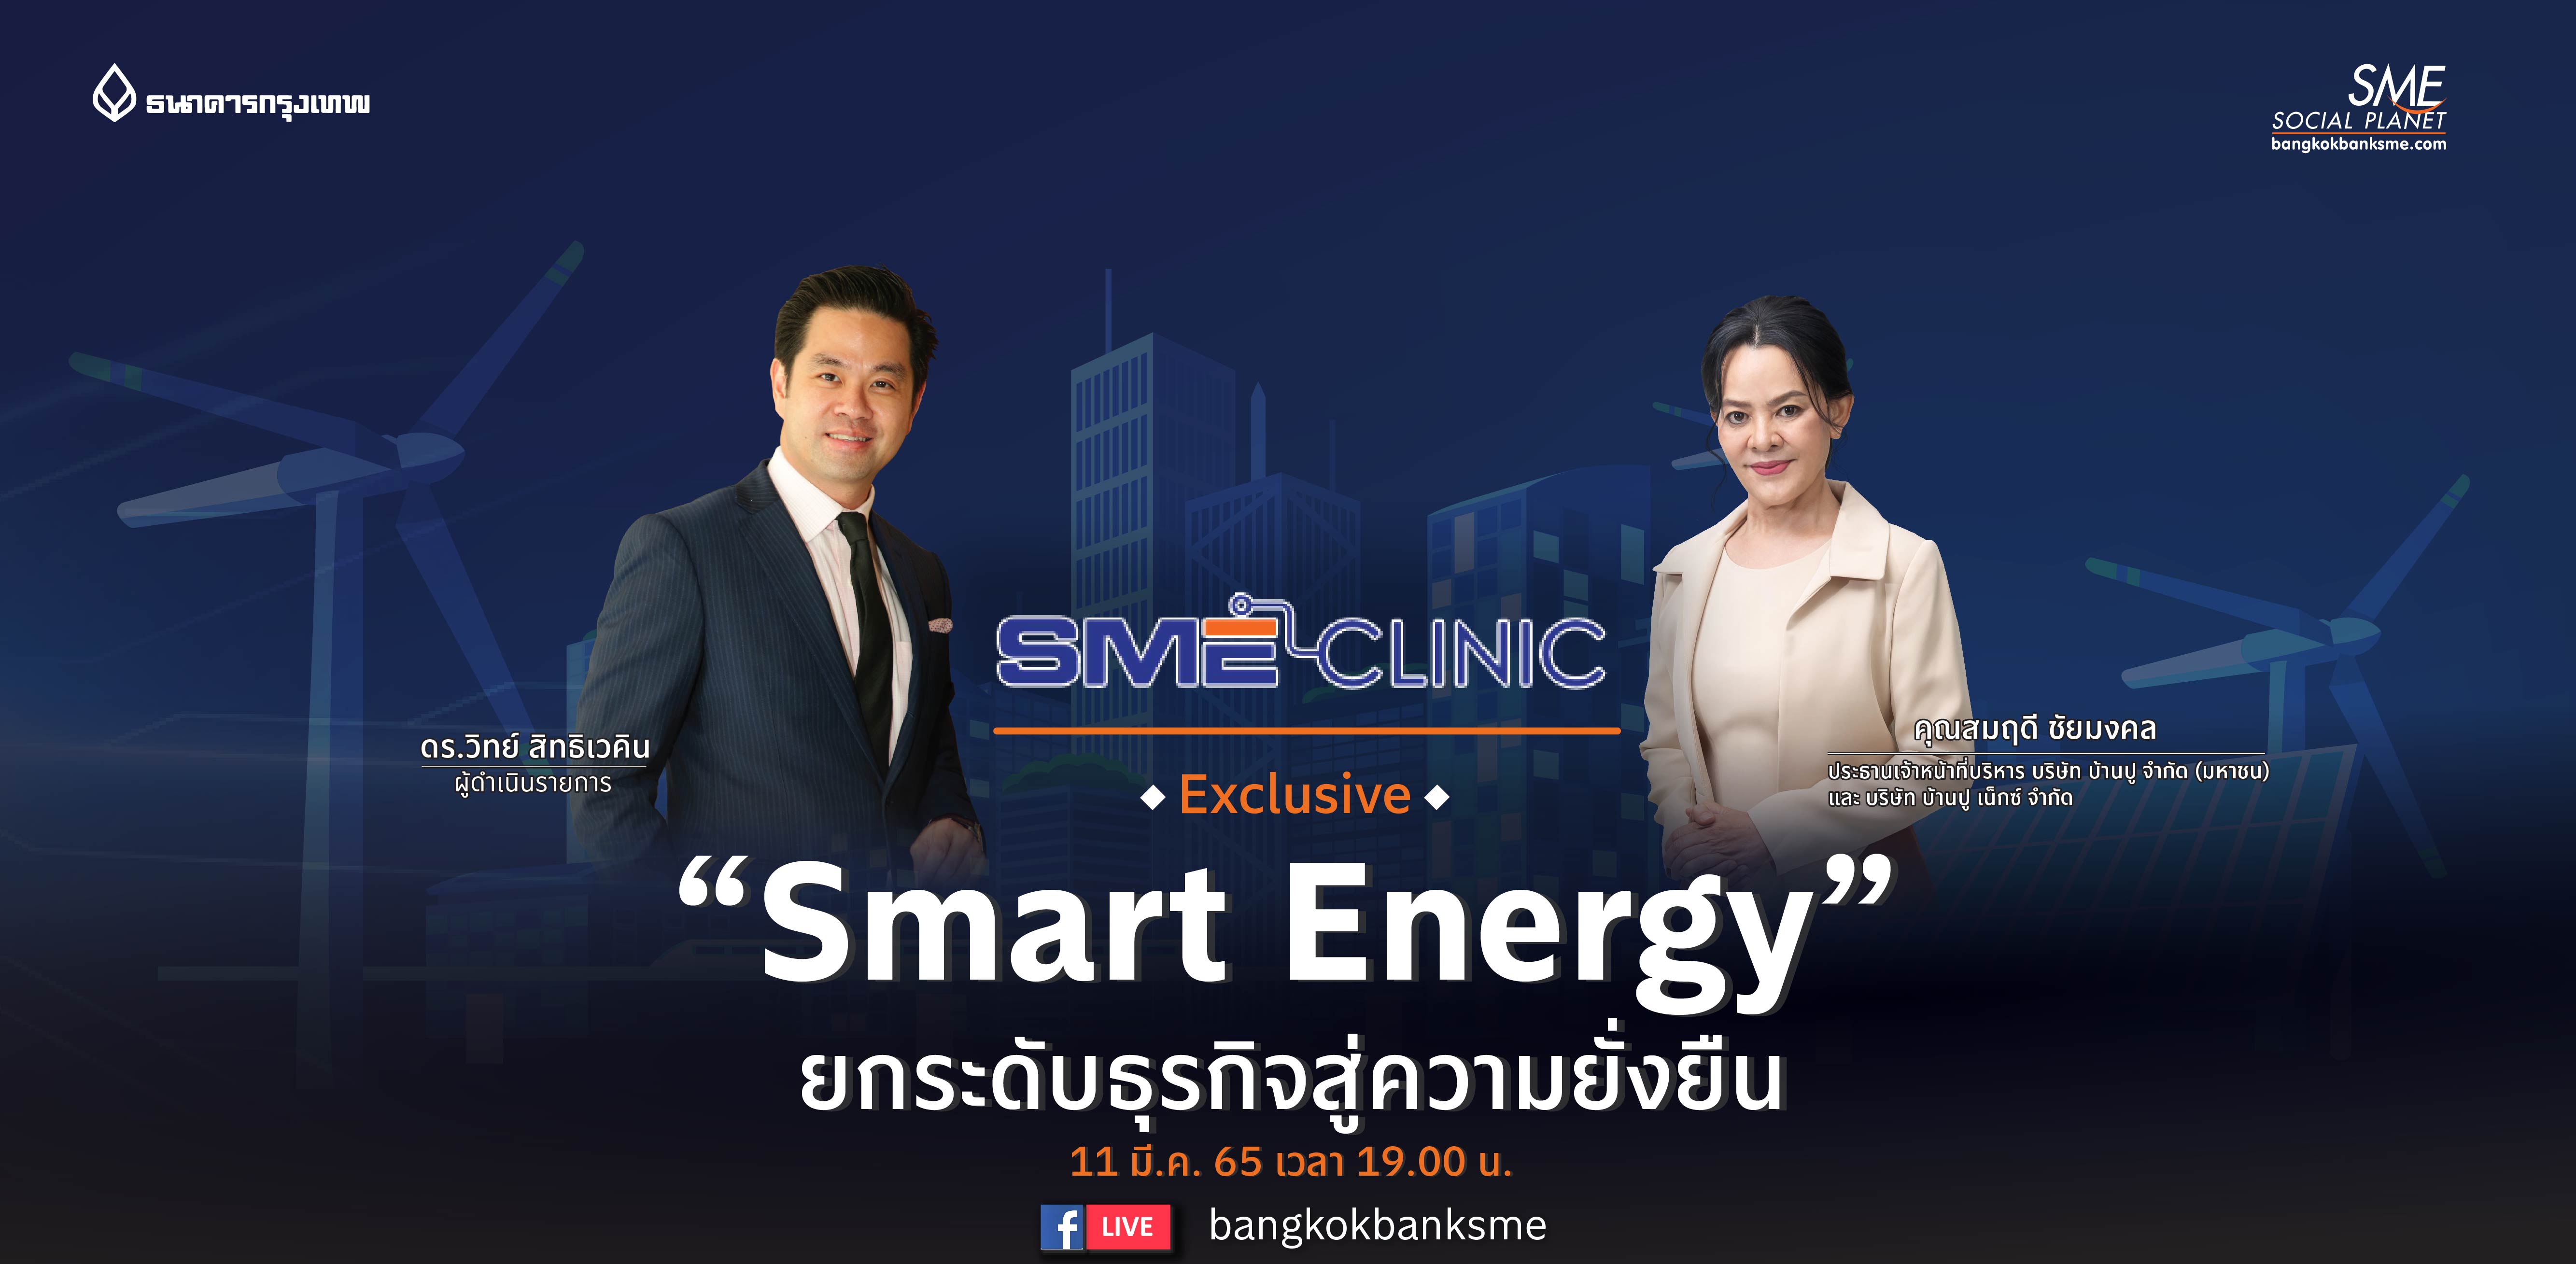 SME Clinic Exclusive ตอน “Smart Energy” ยกระดับธุรกิจสู่ความยั่งยืน